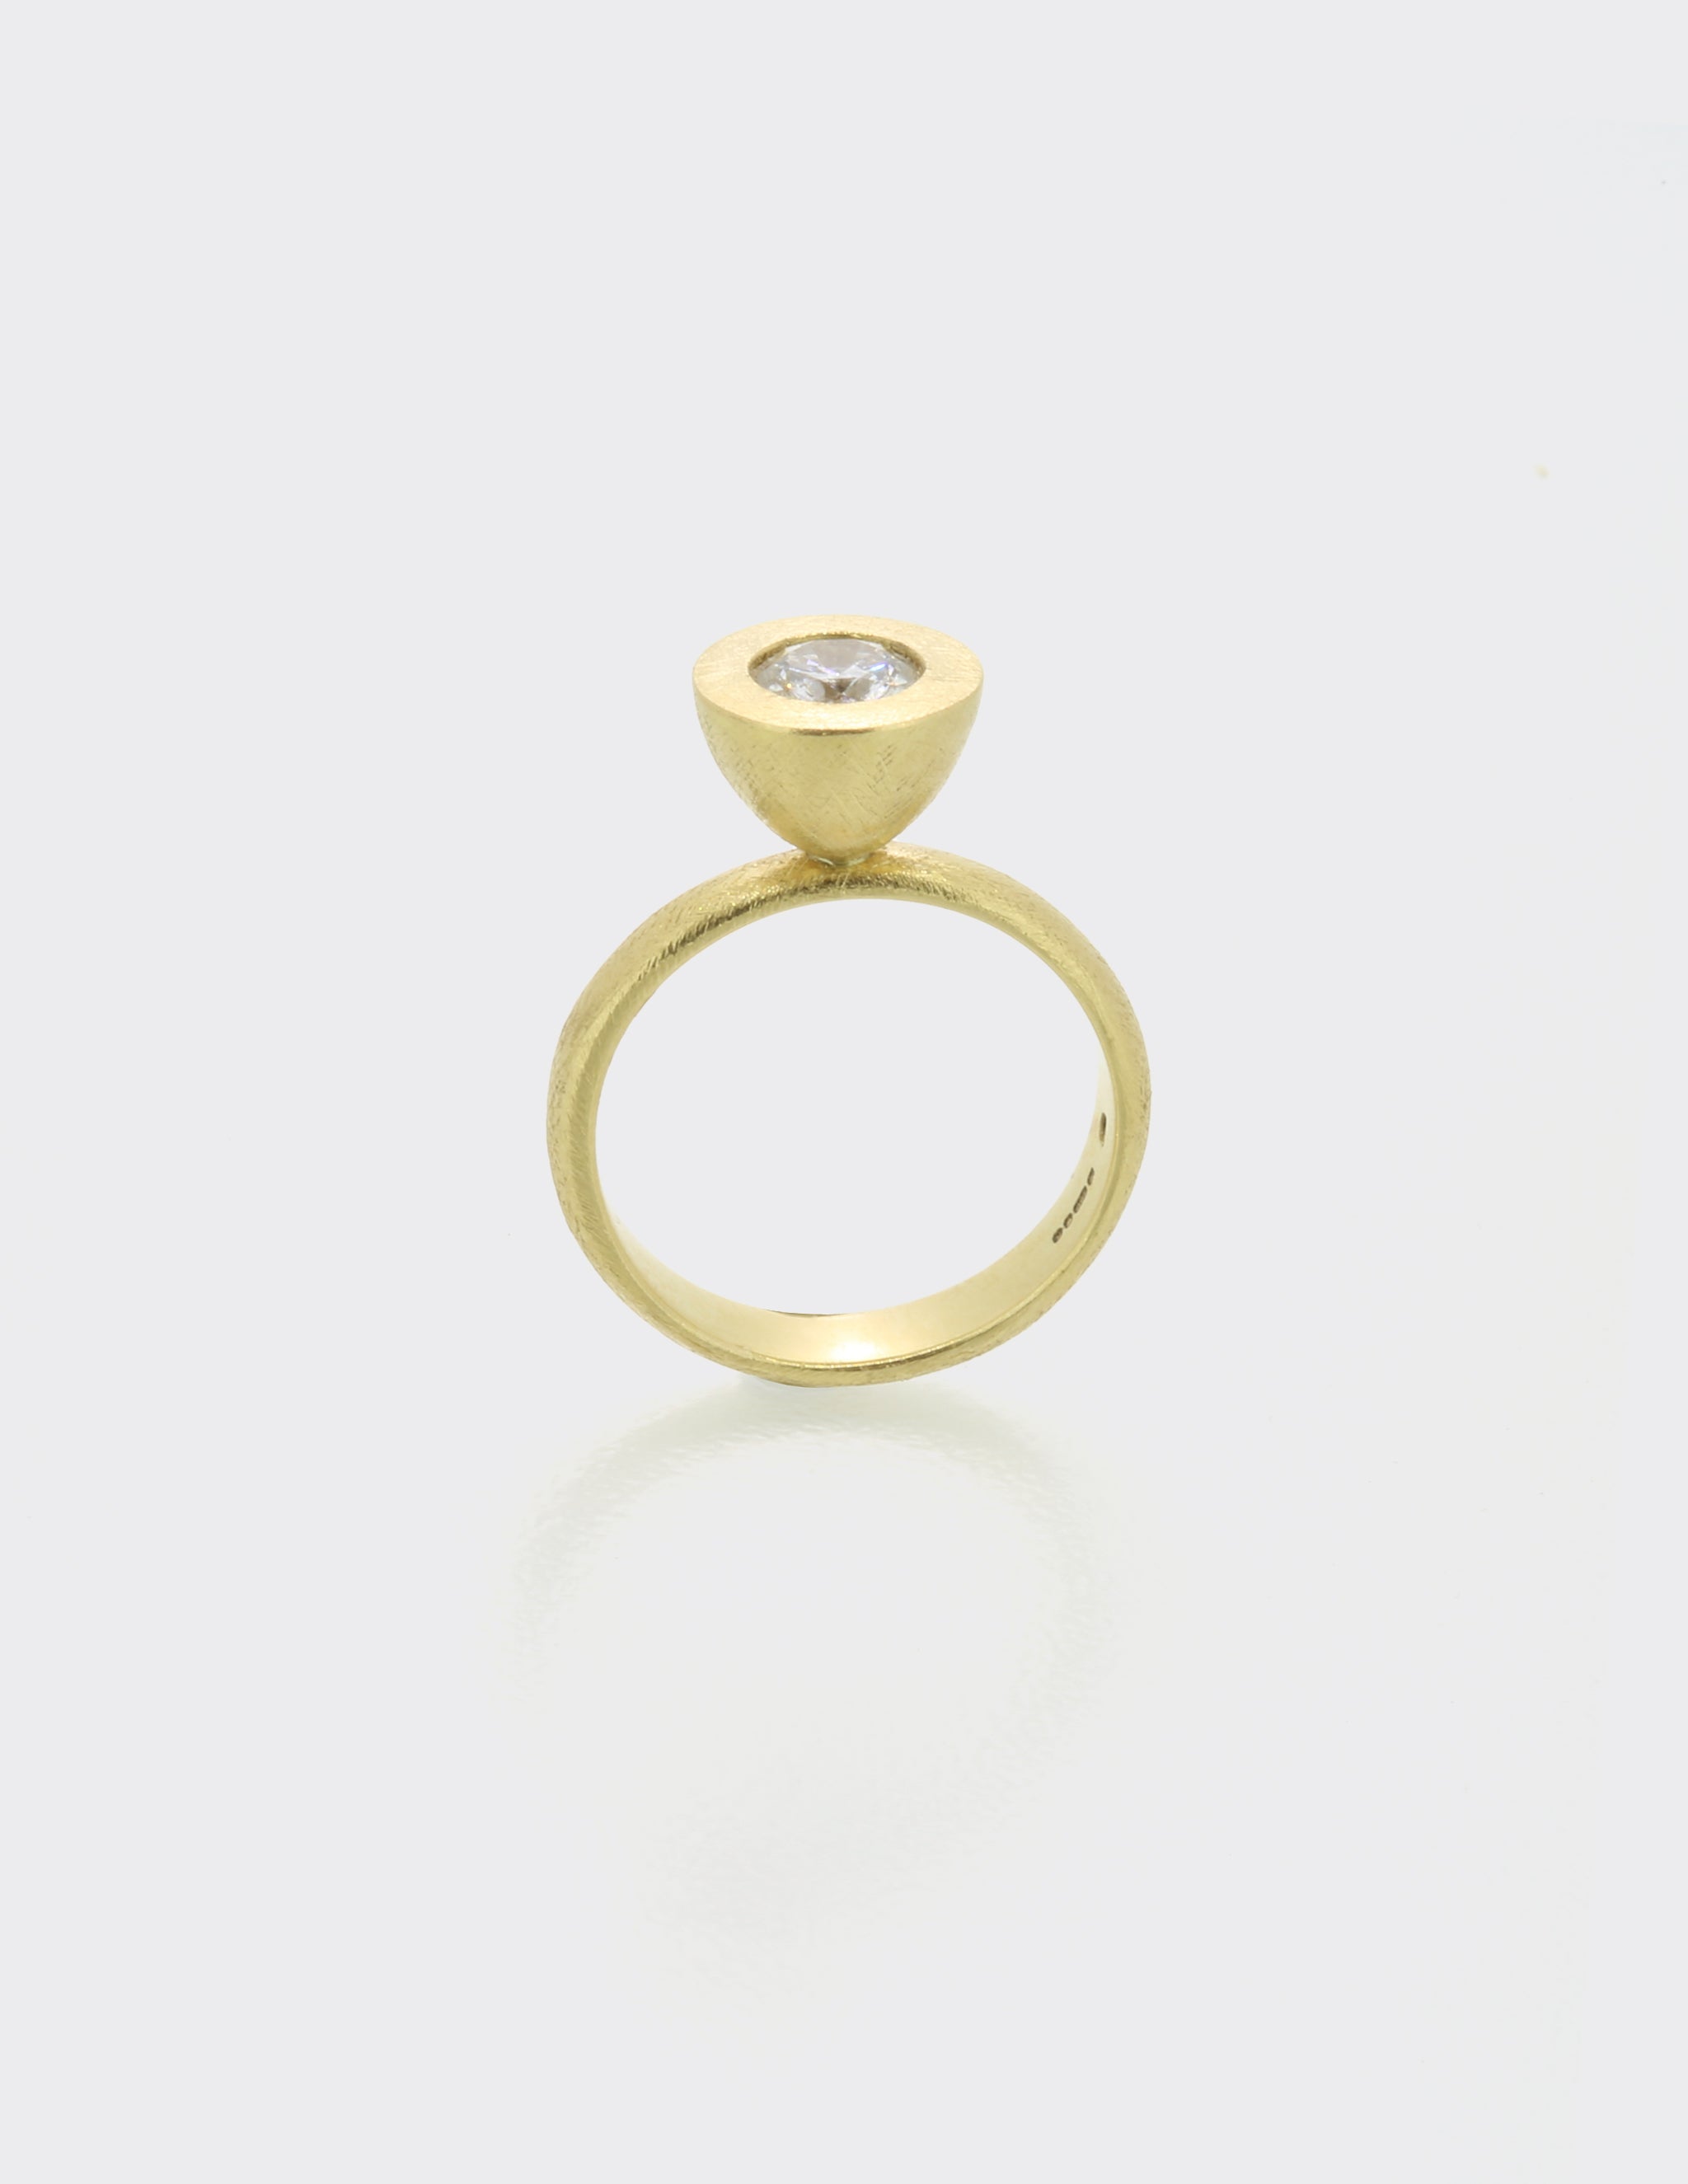 Cone ring with round diamond